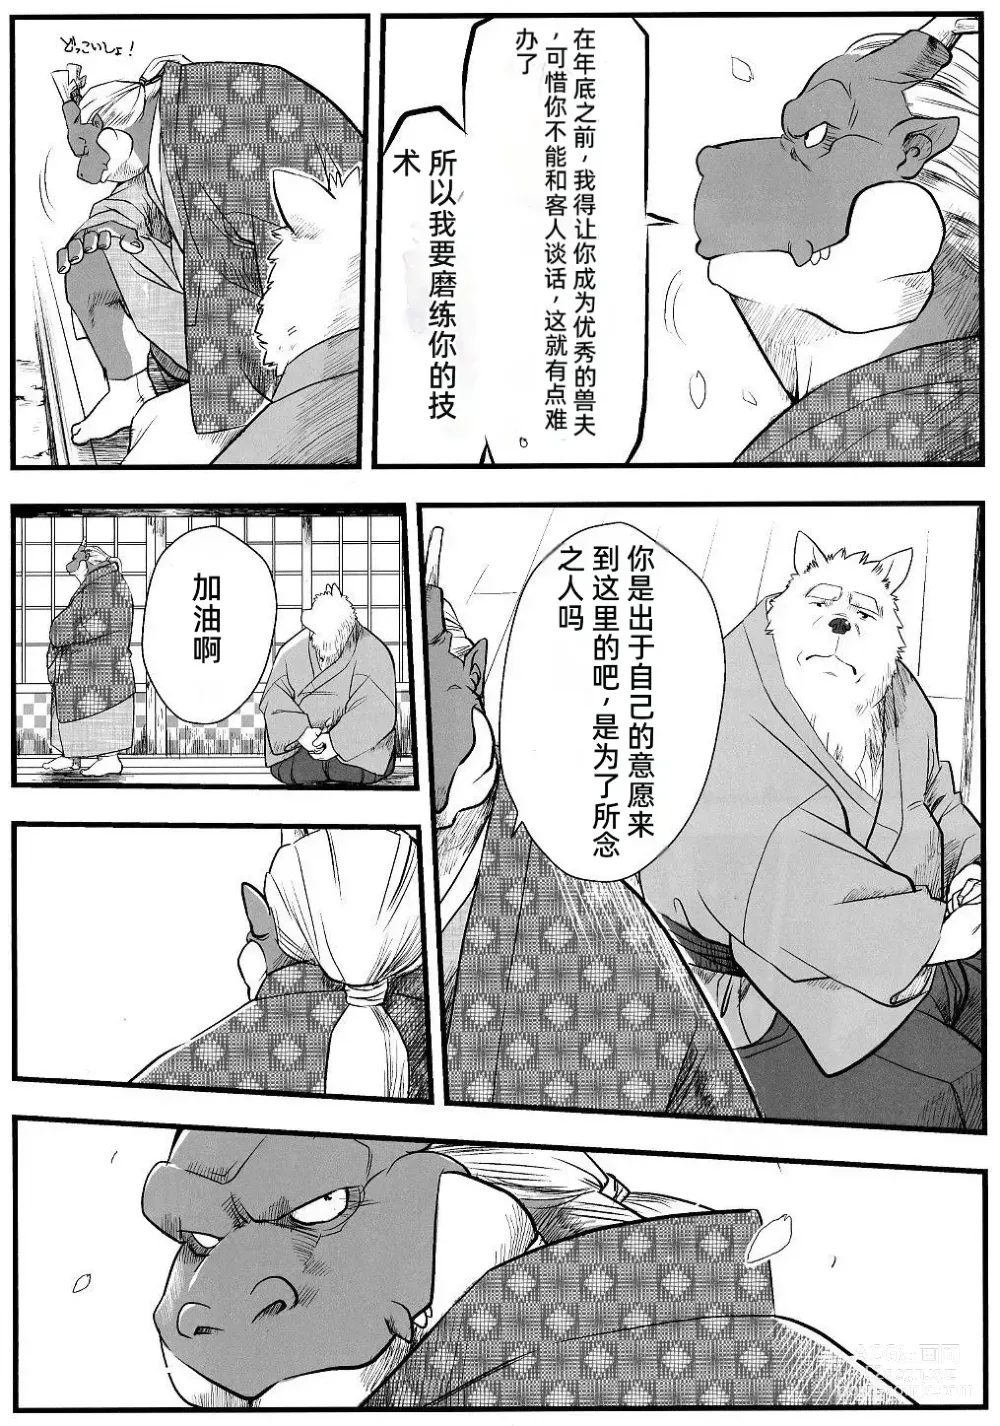 Page 12 of doujinshi 兽之楼郭 月华缭乱 月阴之章